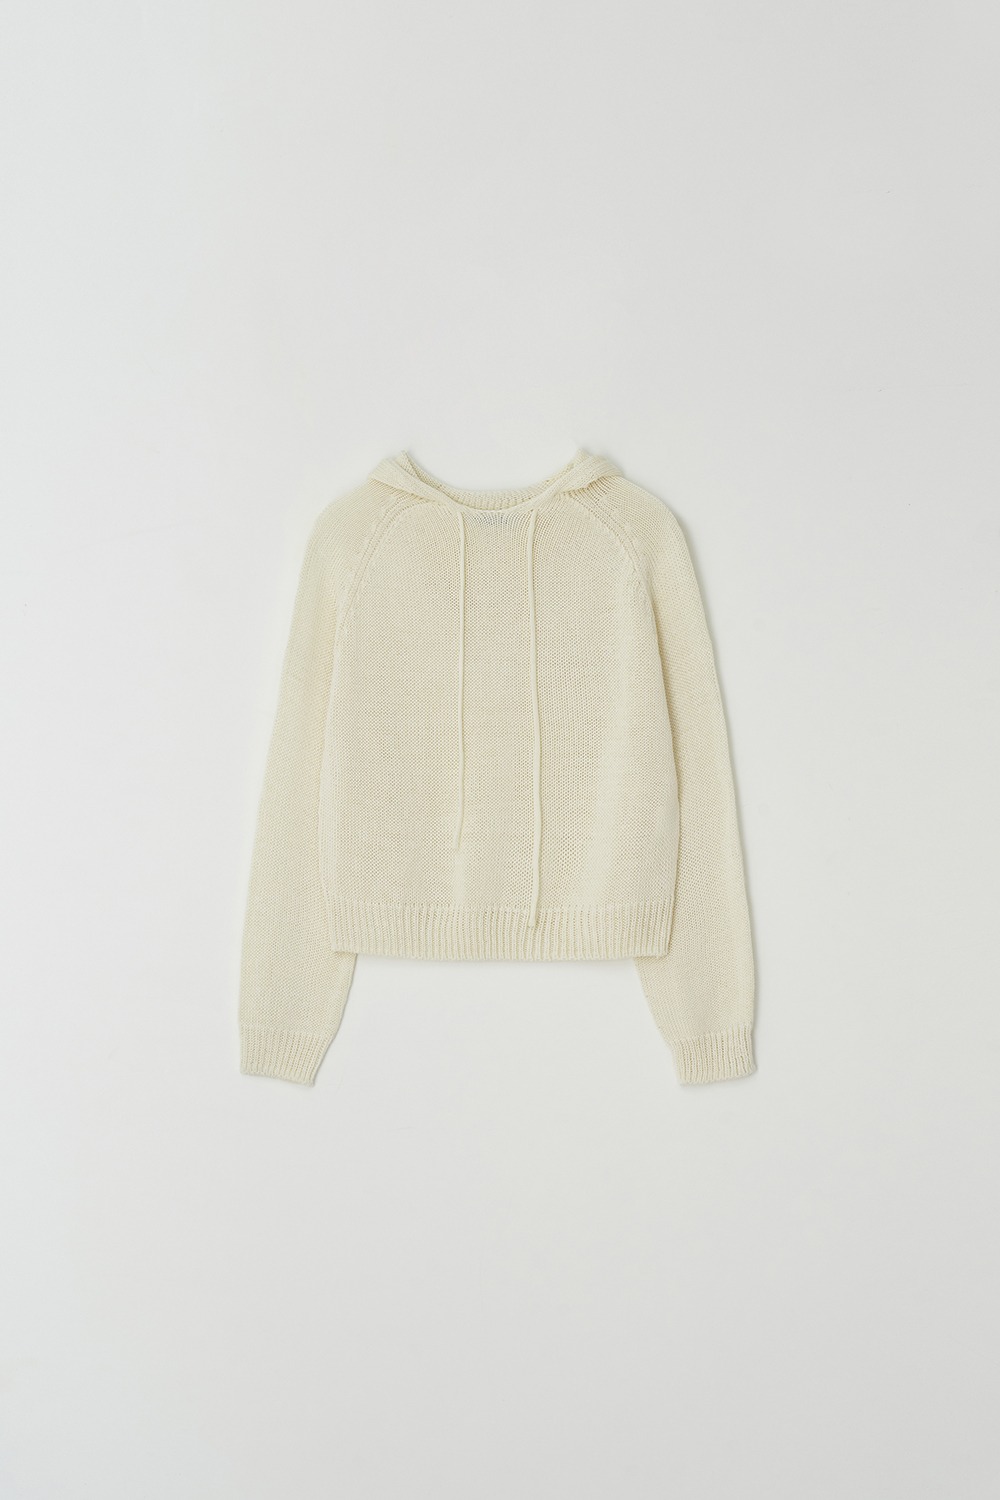 Whole garment hood knit (Cream)